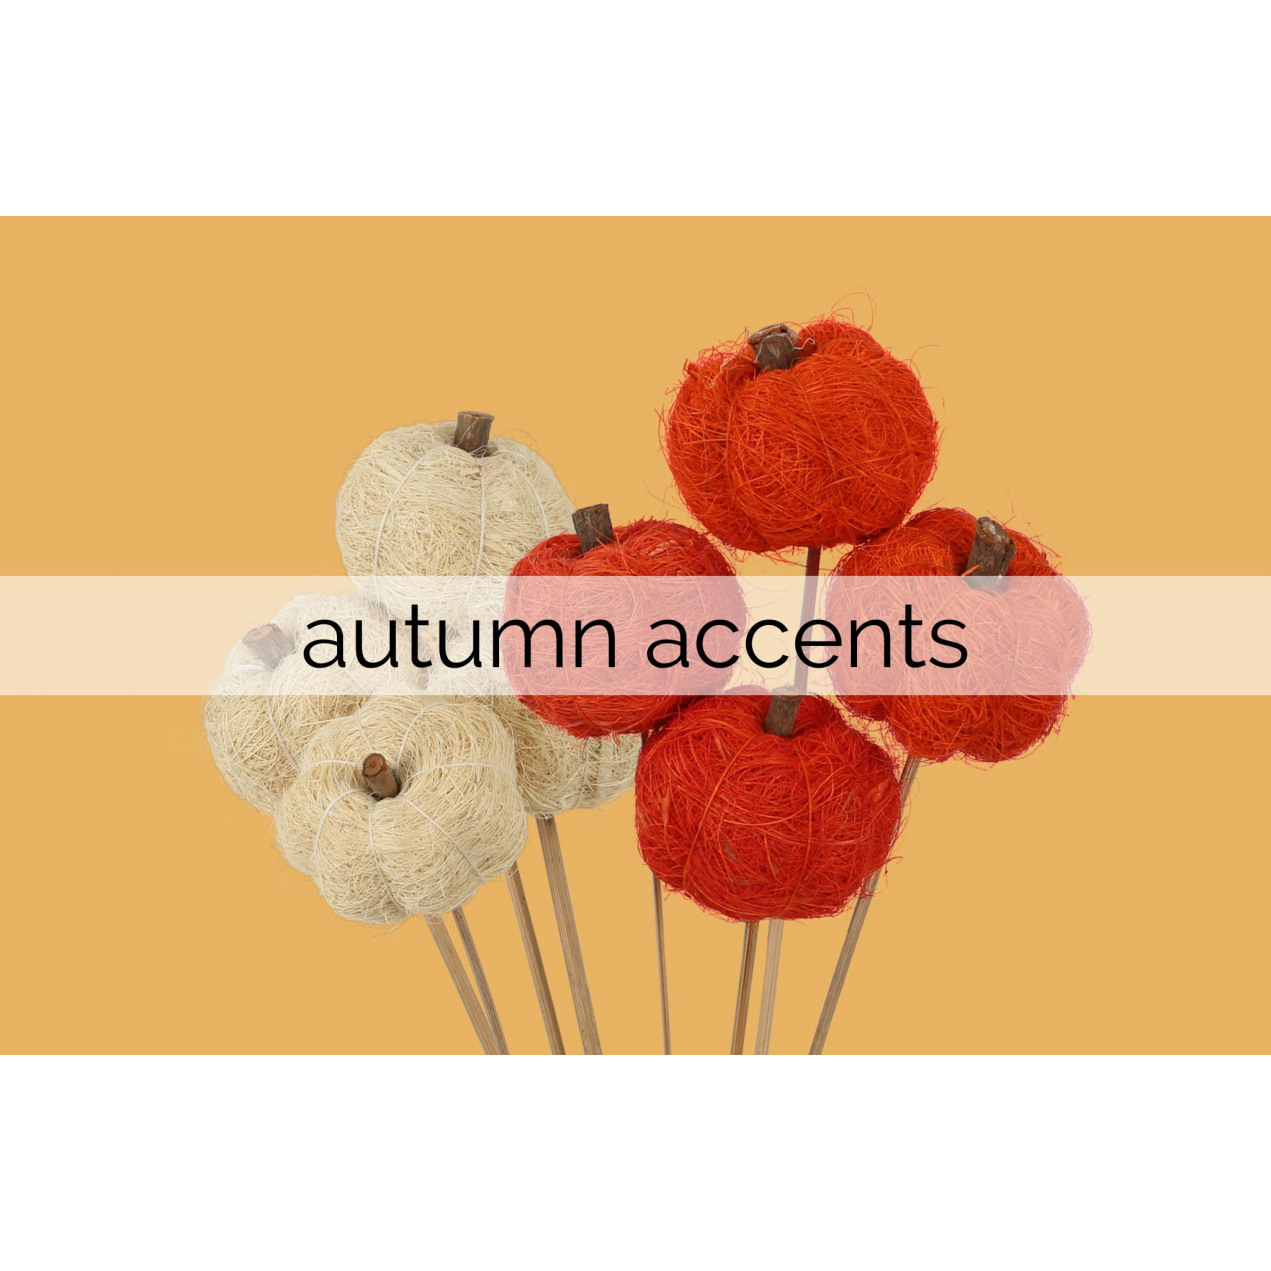 autumn accents